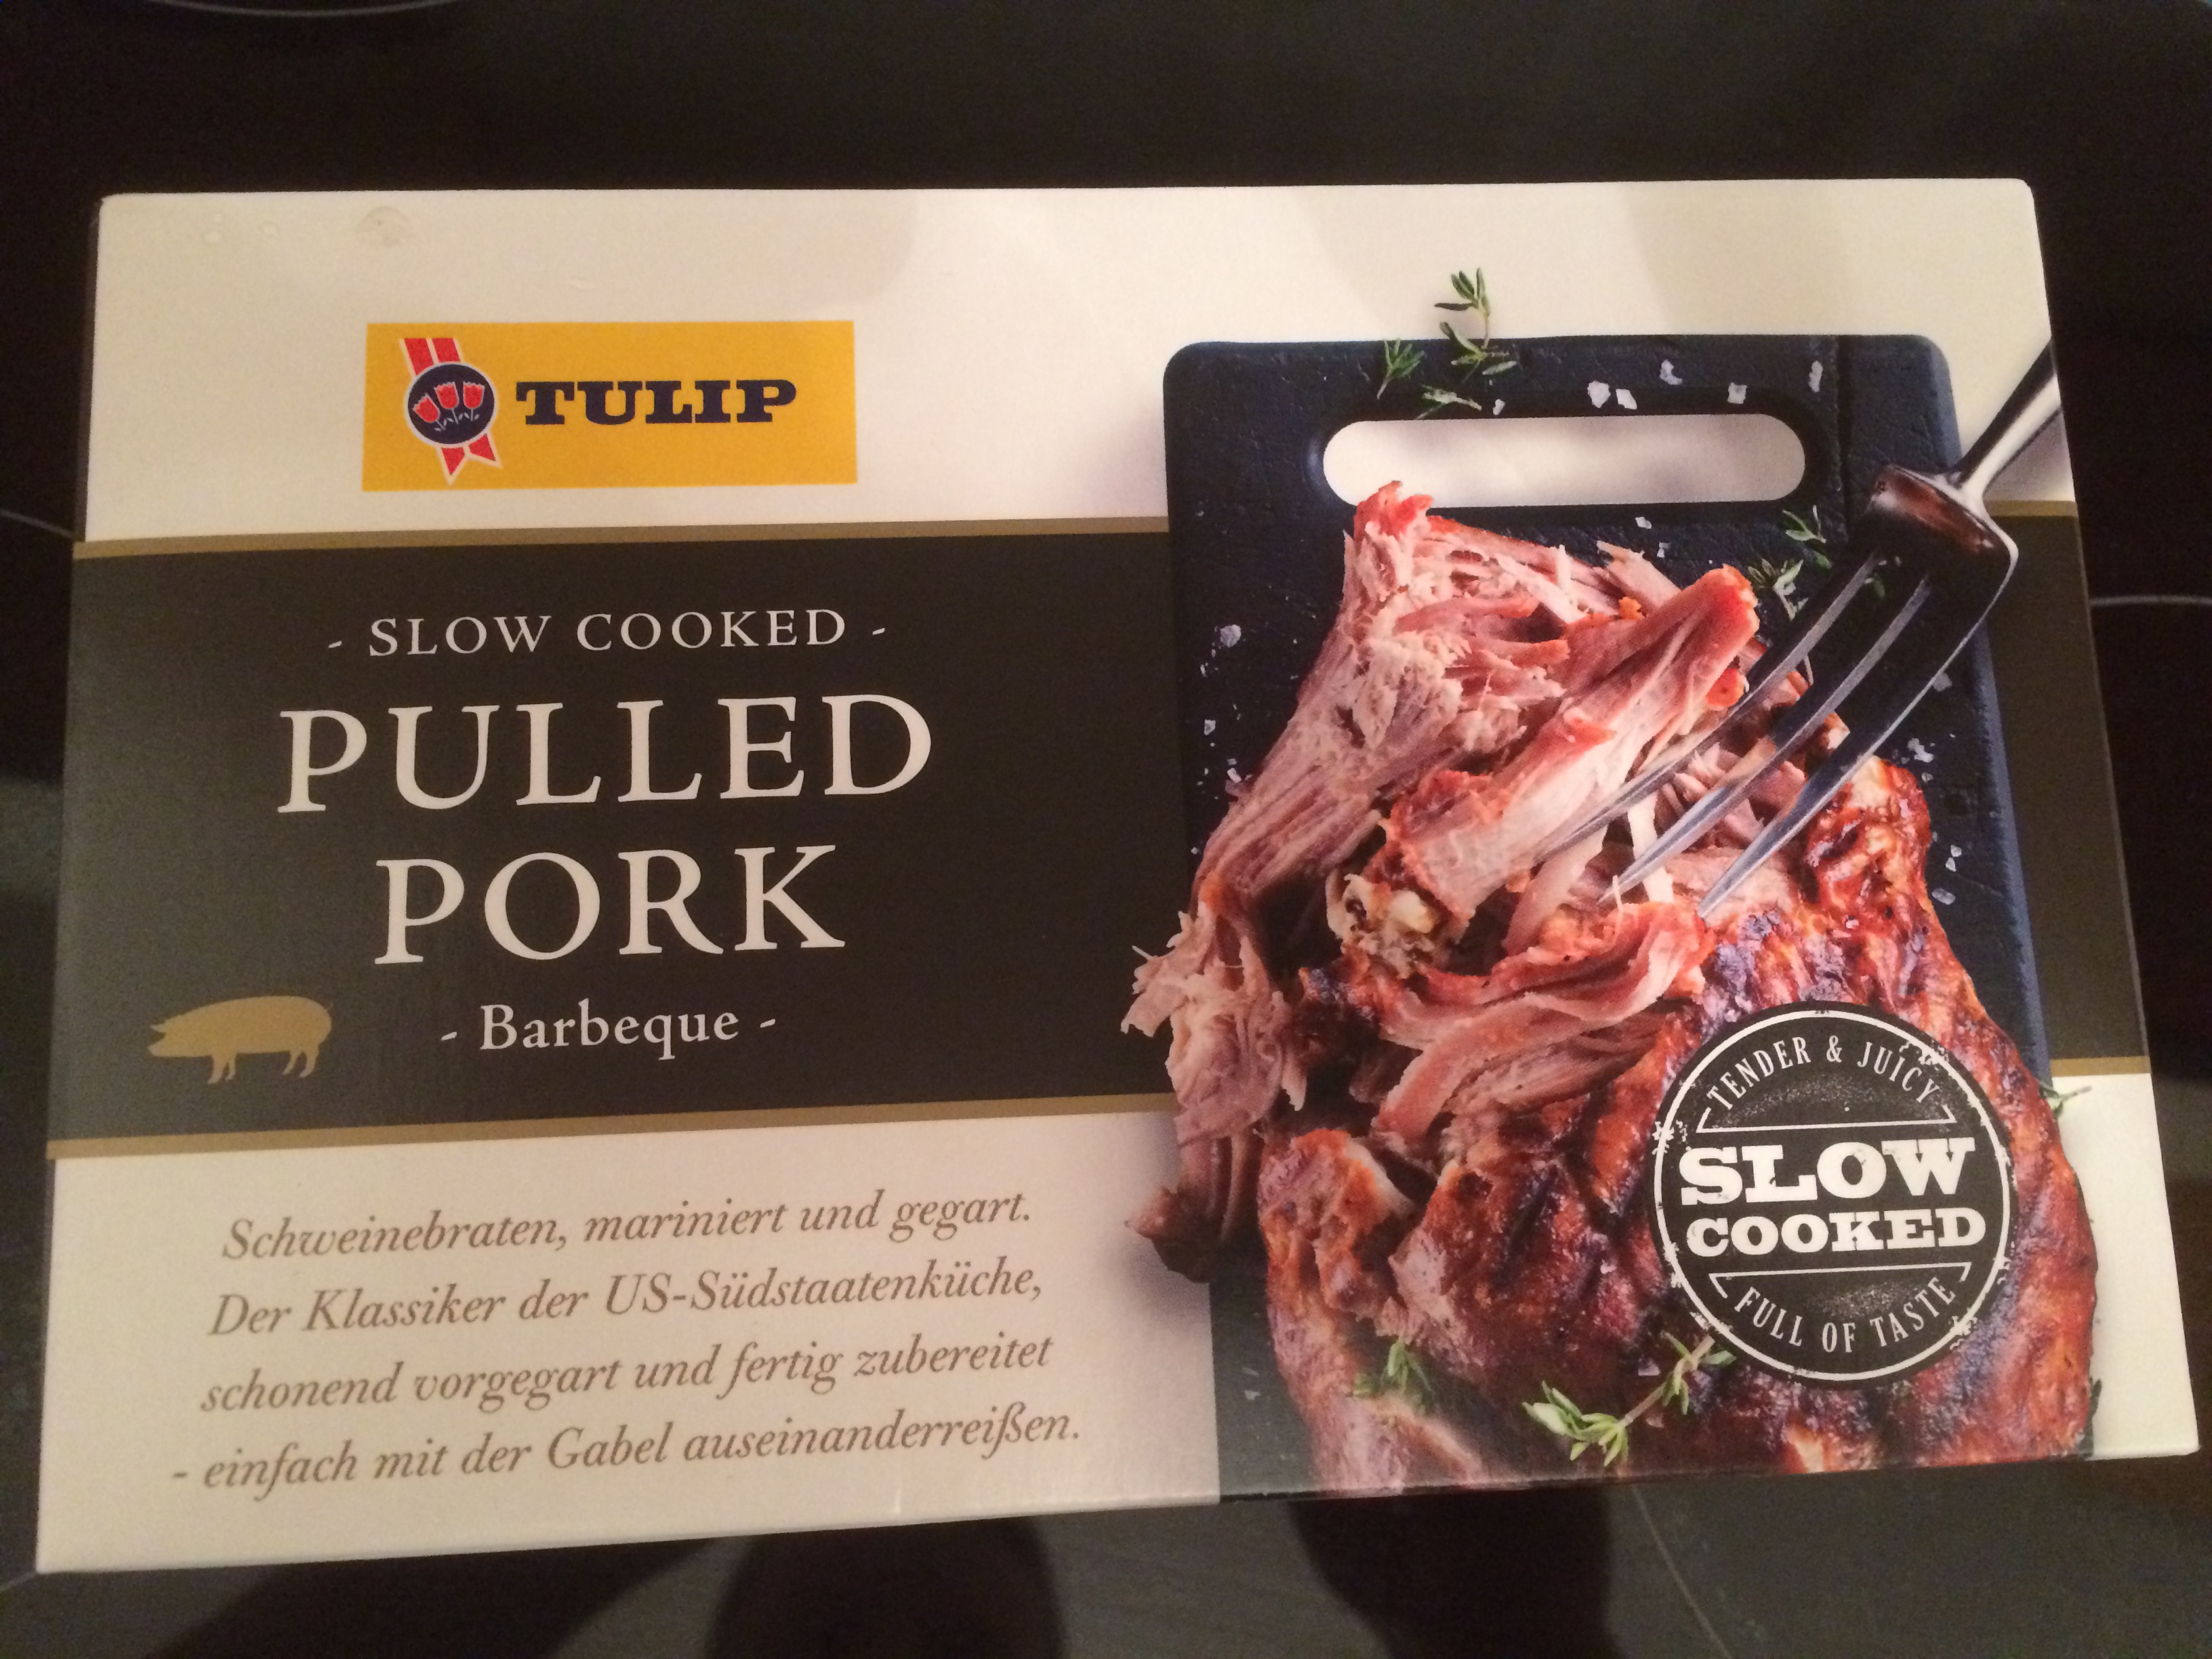 Pulled Pork Tulip